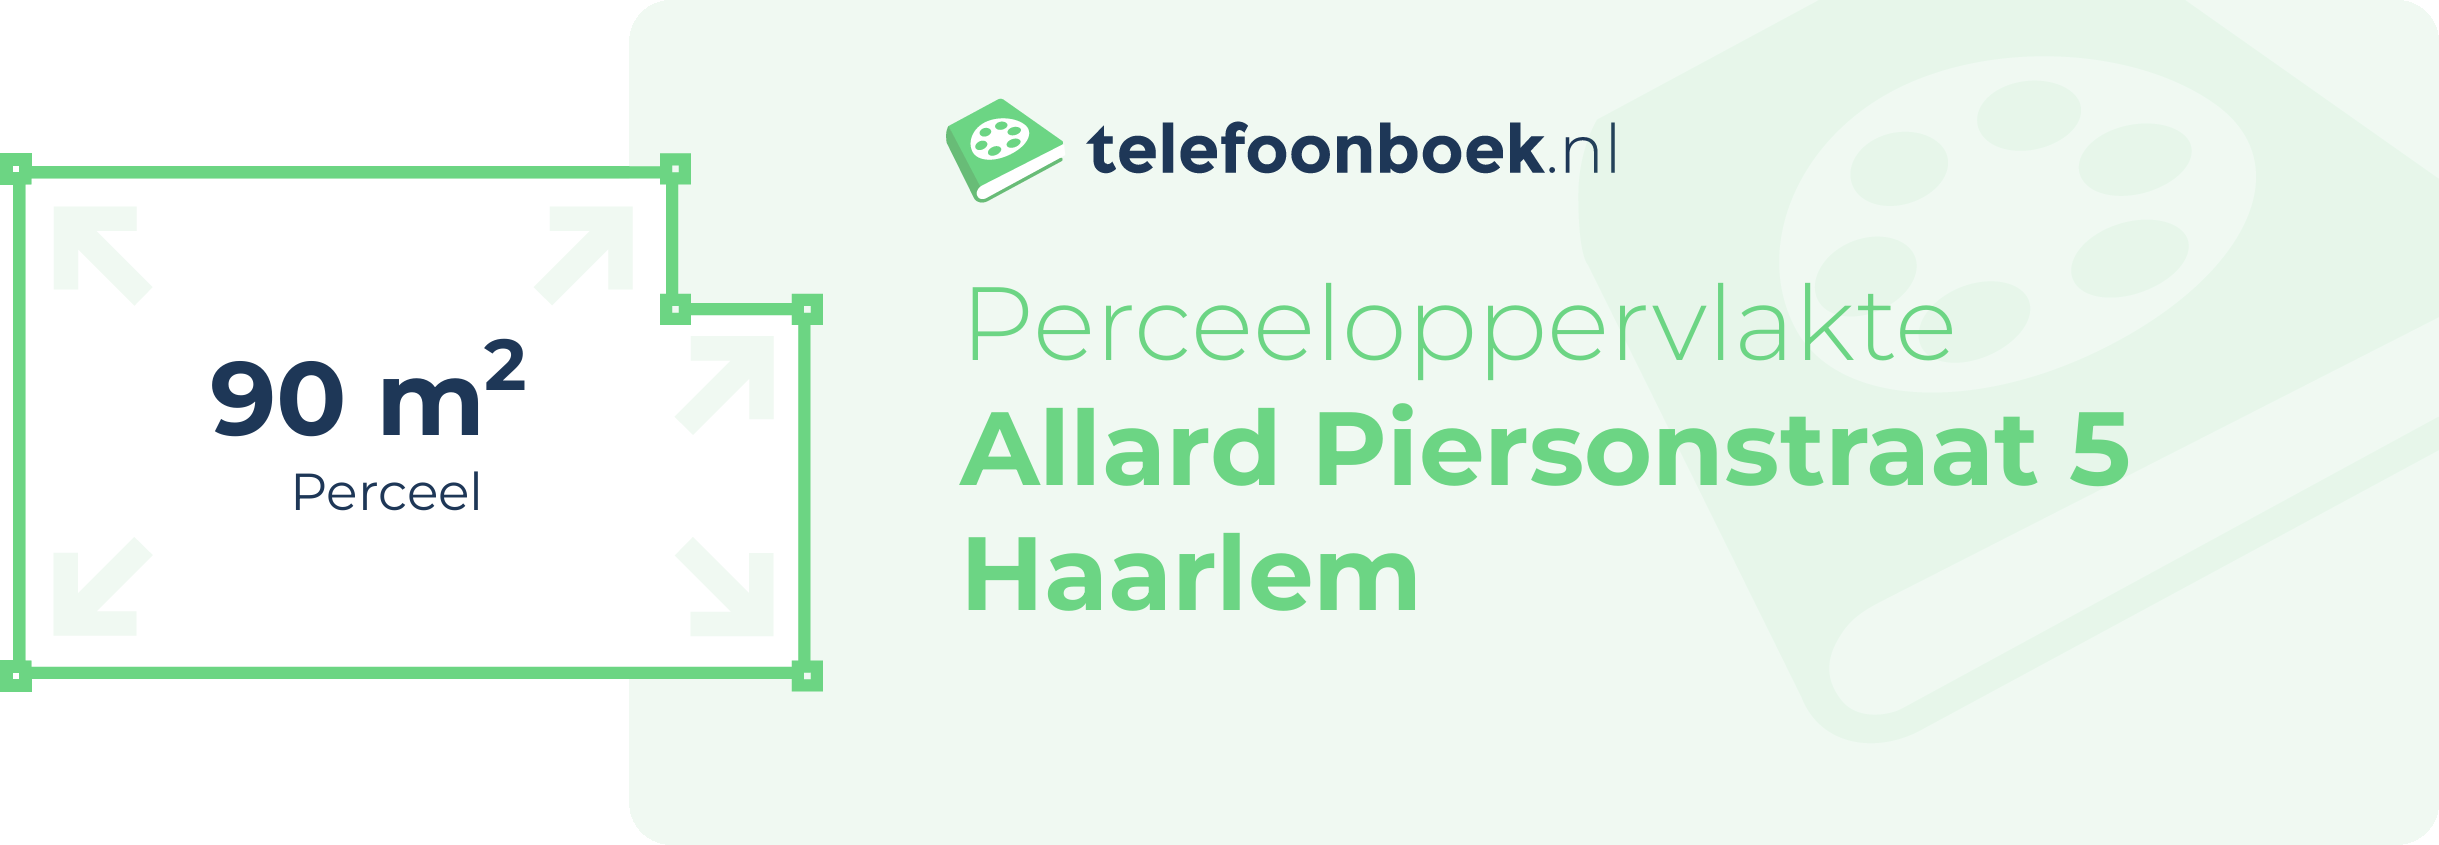 Perceeloppervlakte Allard Piersonstraat 5 Haarlem